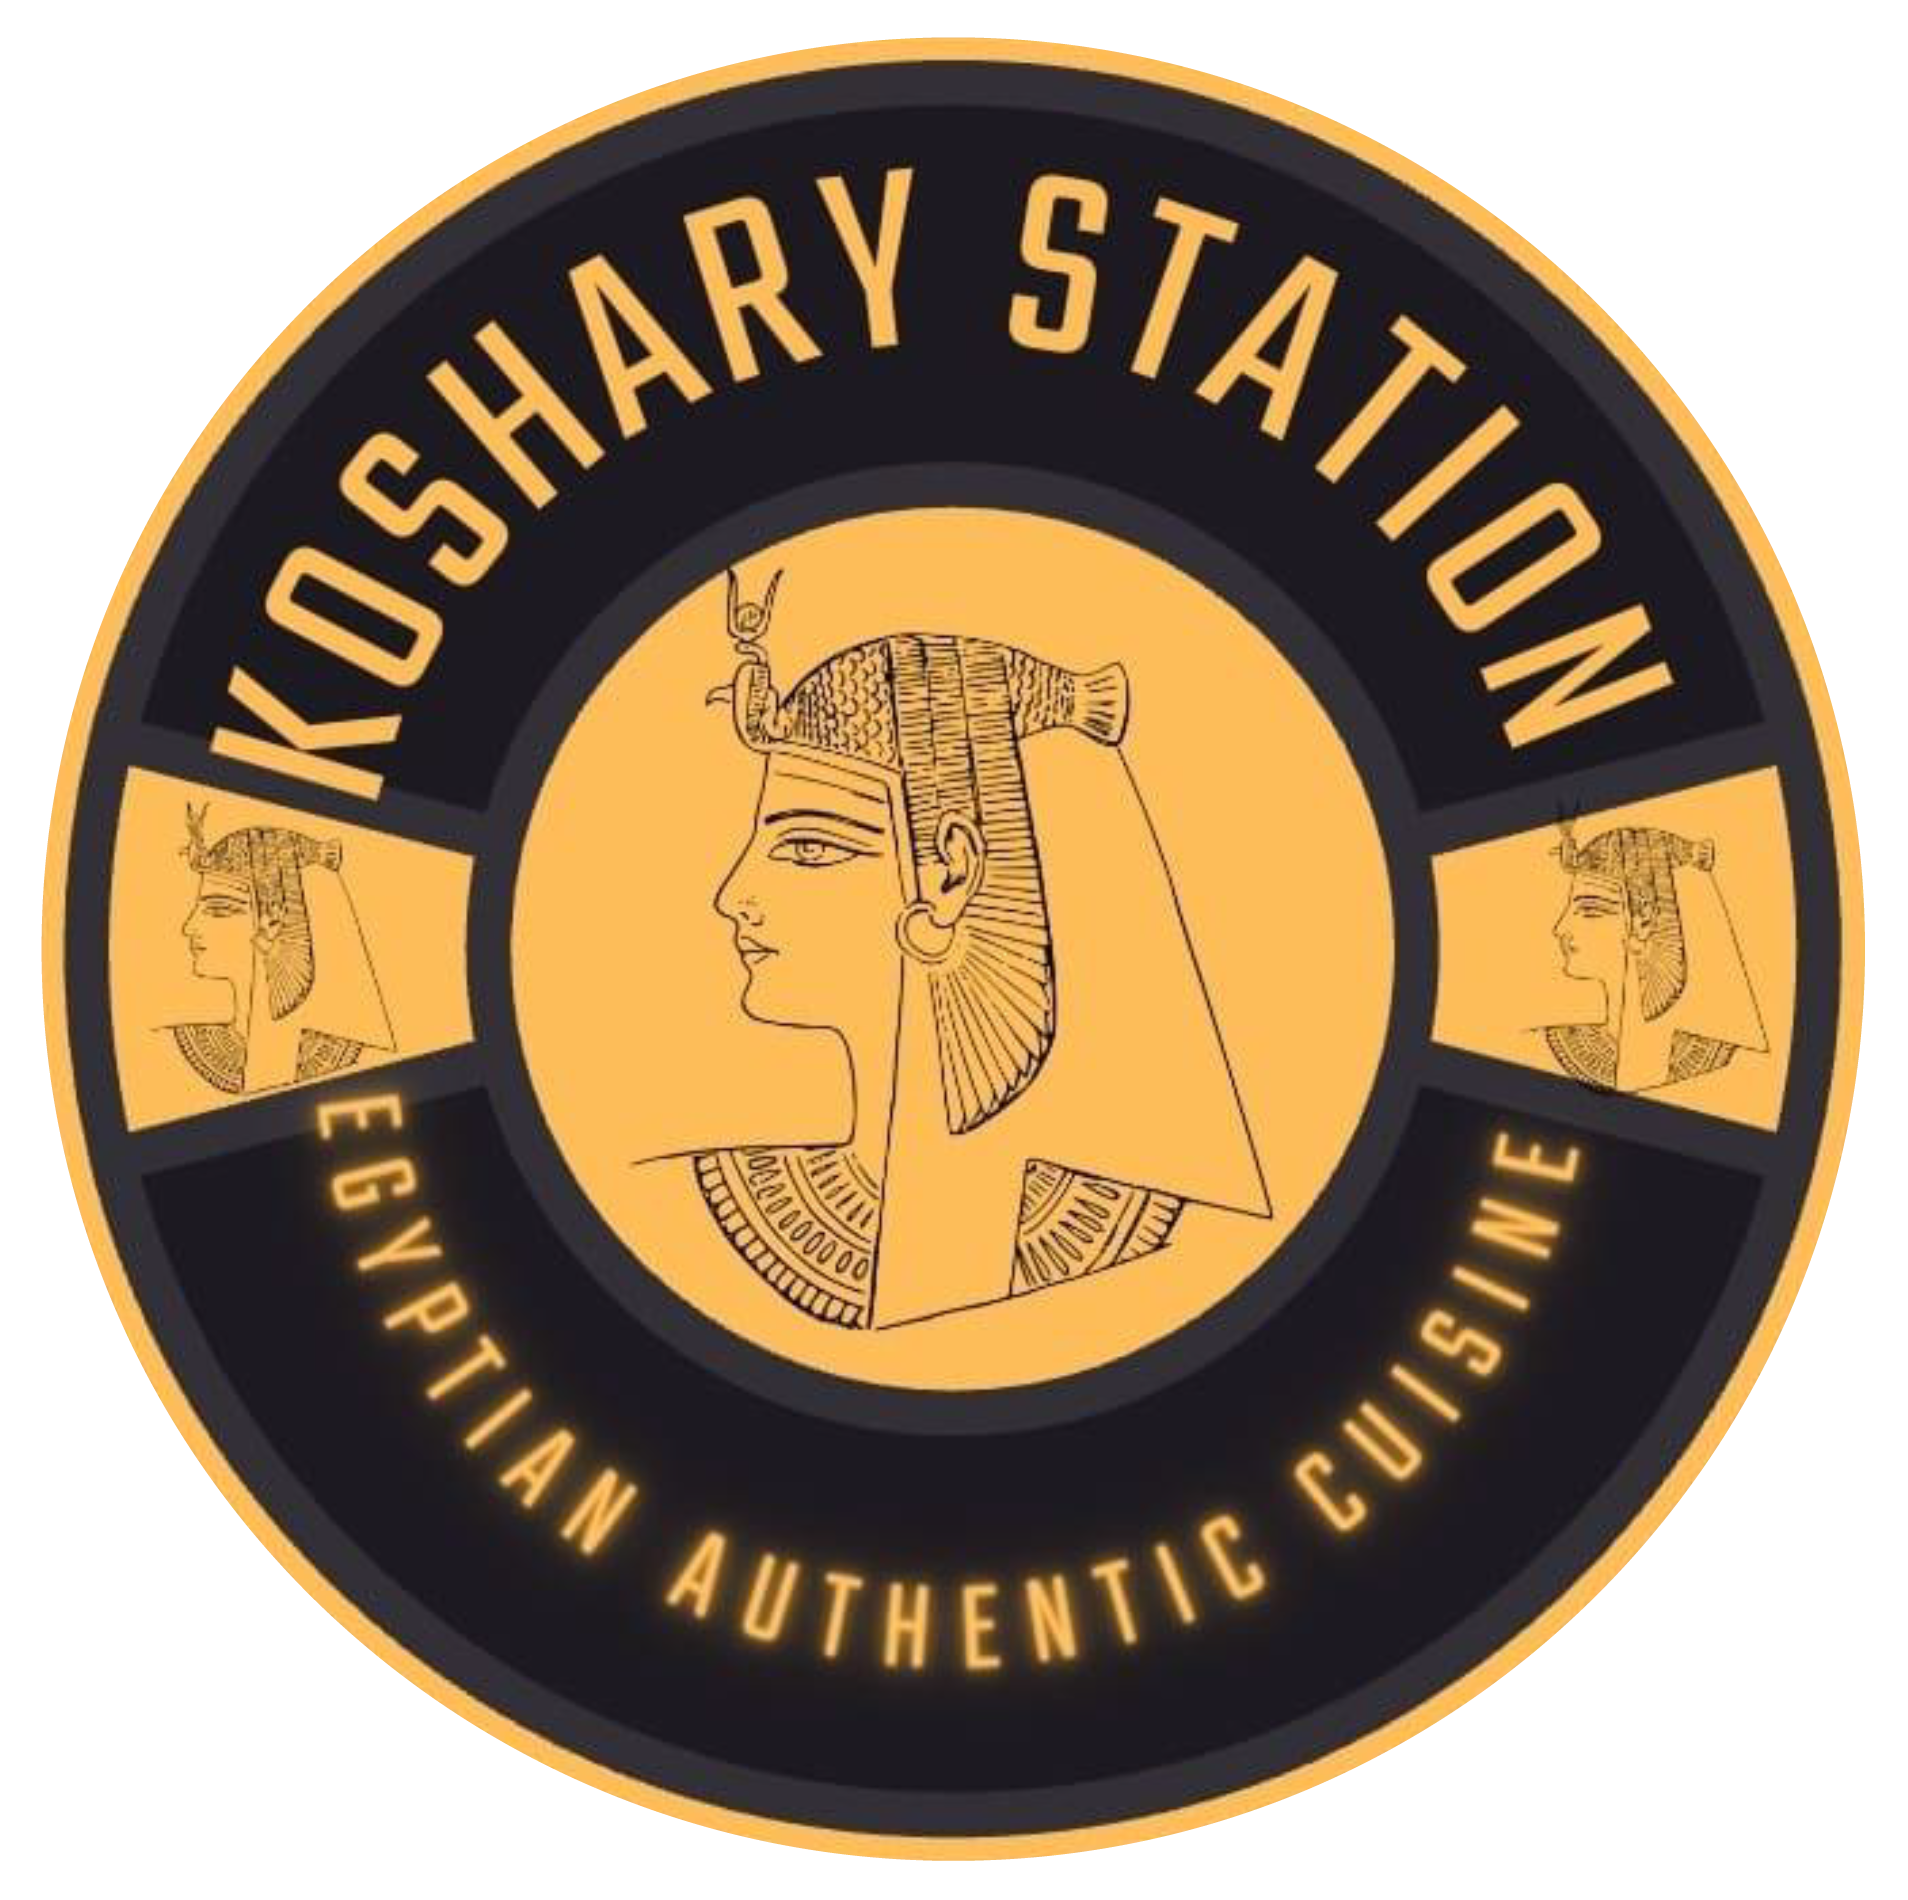 Koshary Station Home